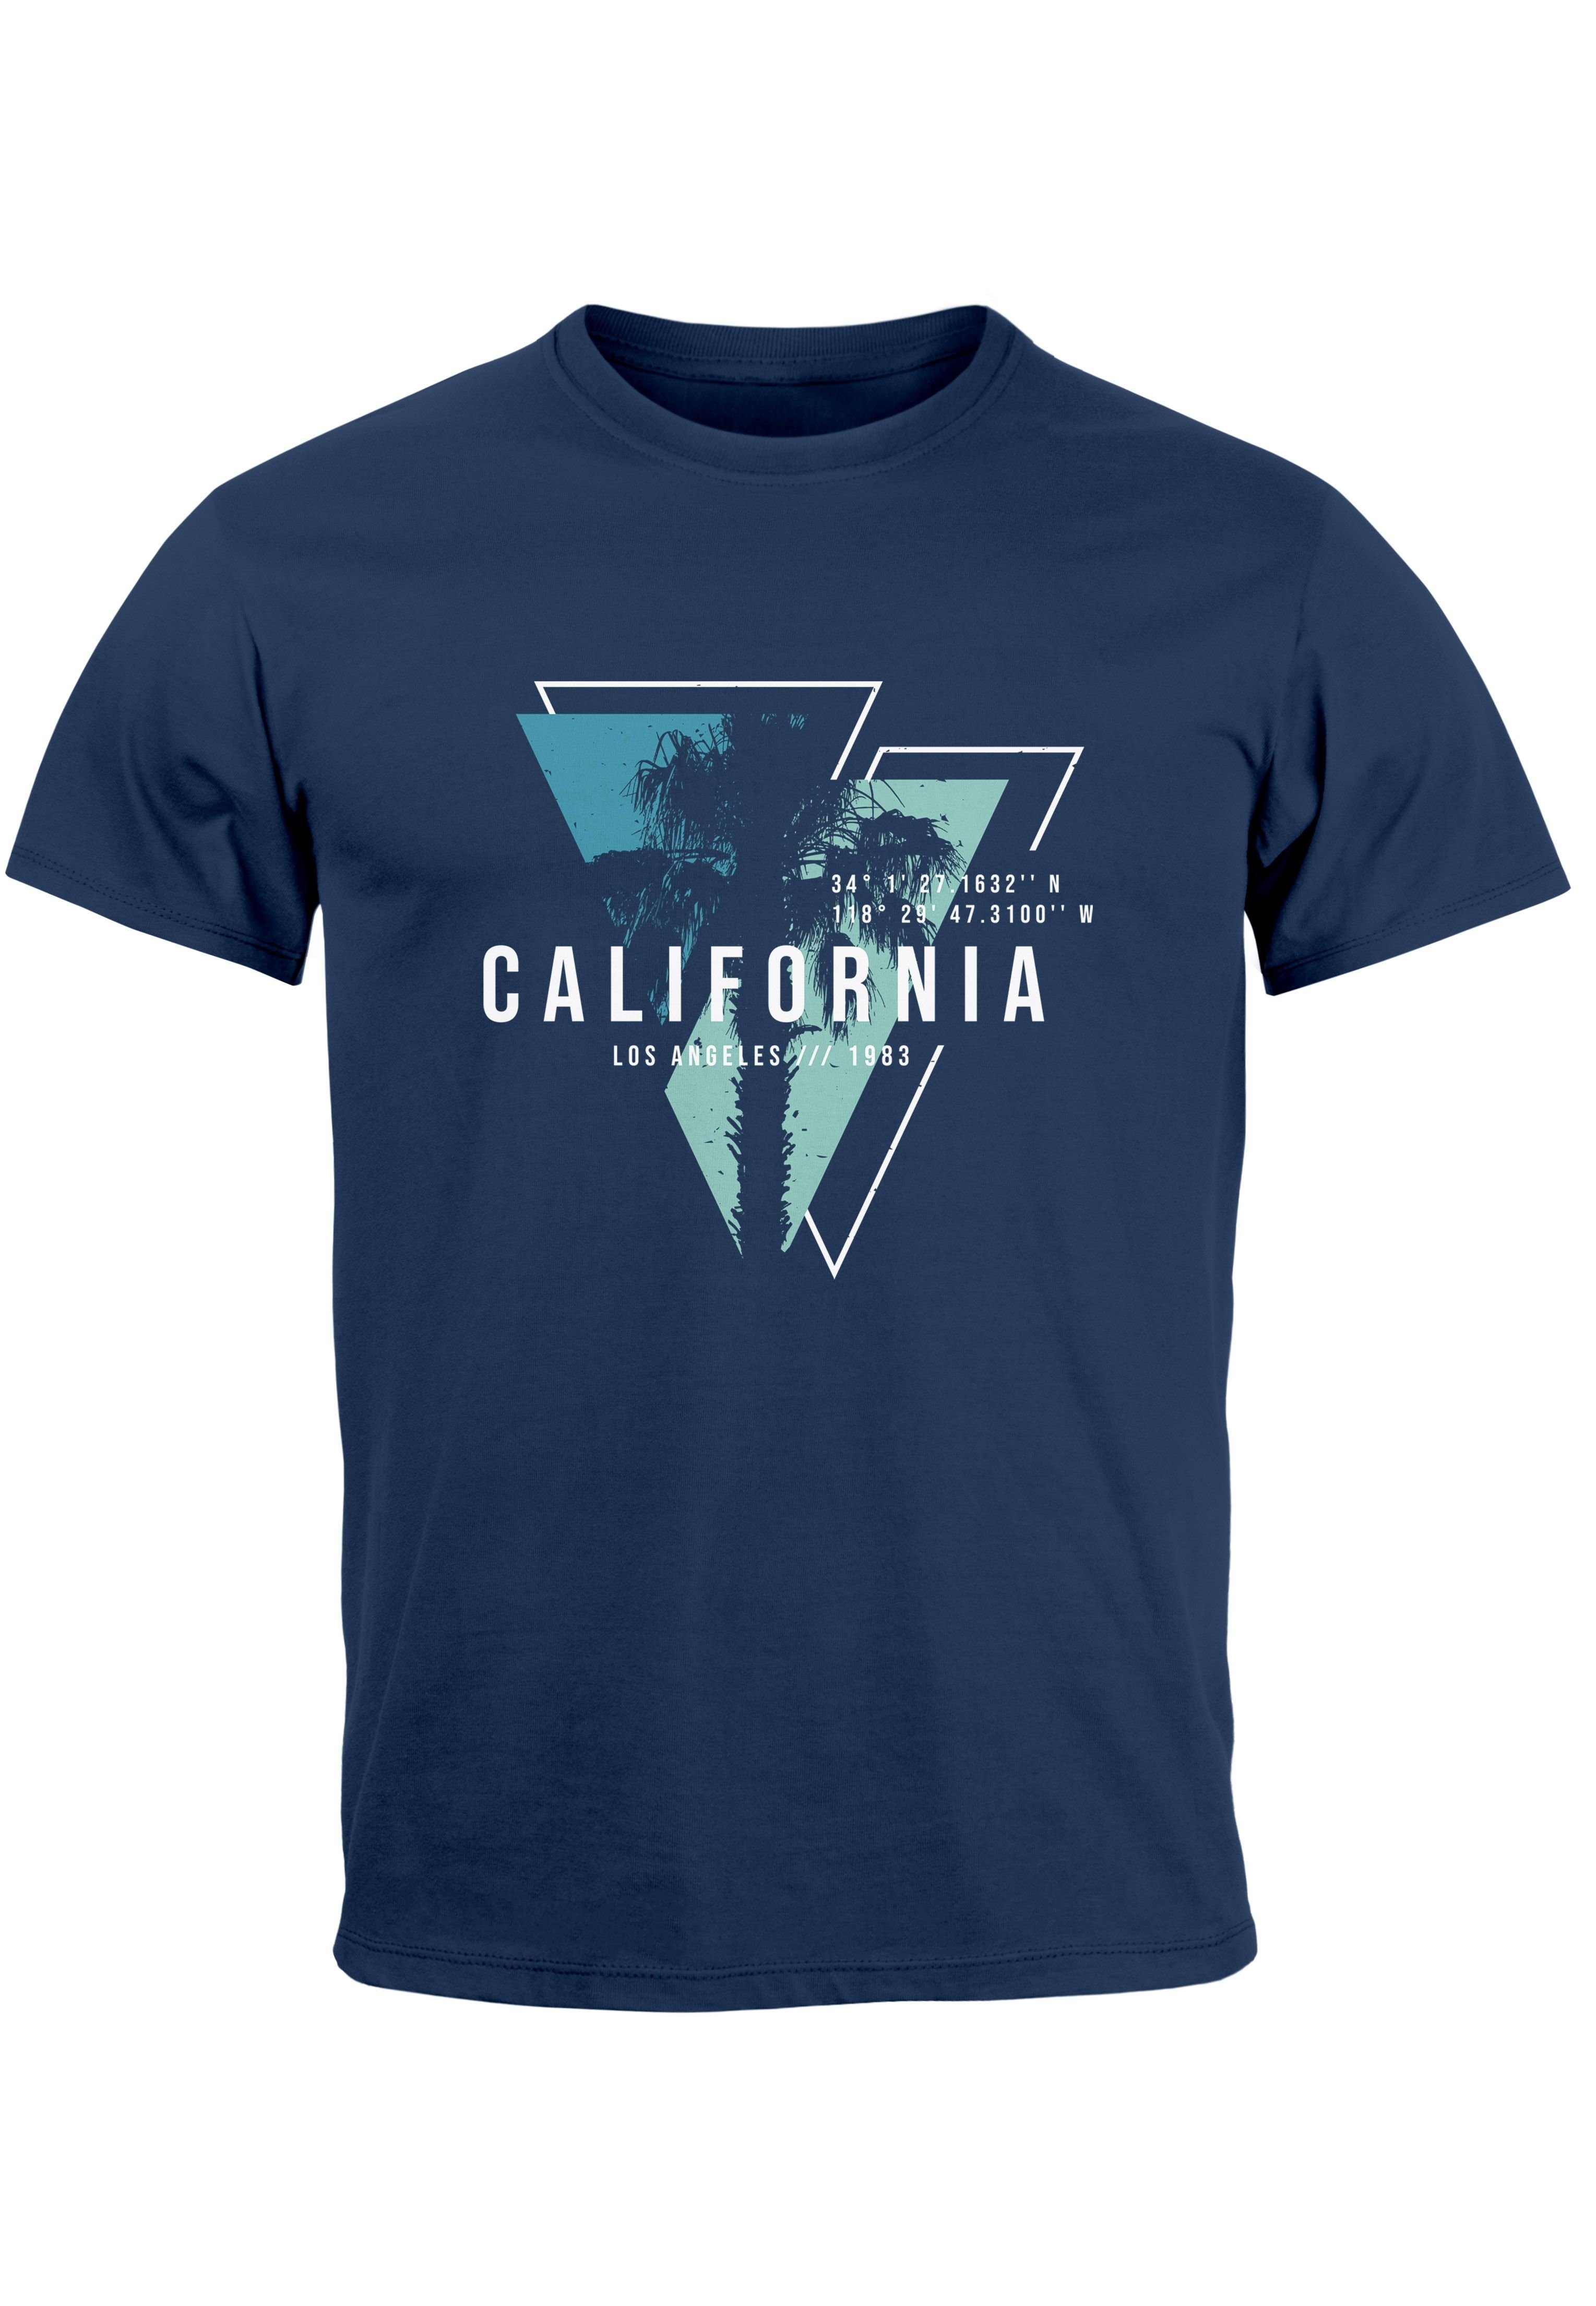 Los Sommer Surfing Neverless T-Shirt Angeles Motiv Herren navy-blau Print-Shirt Fashion Print California USA mit